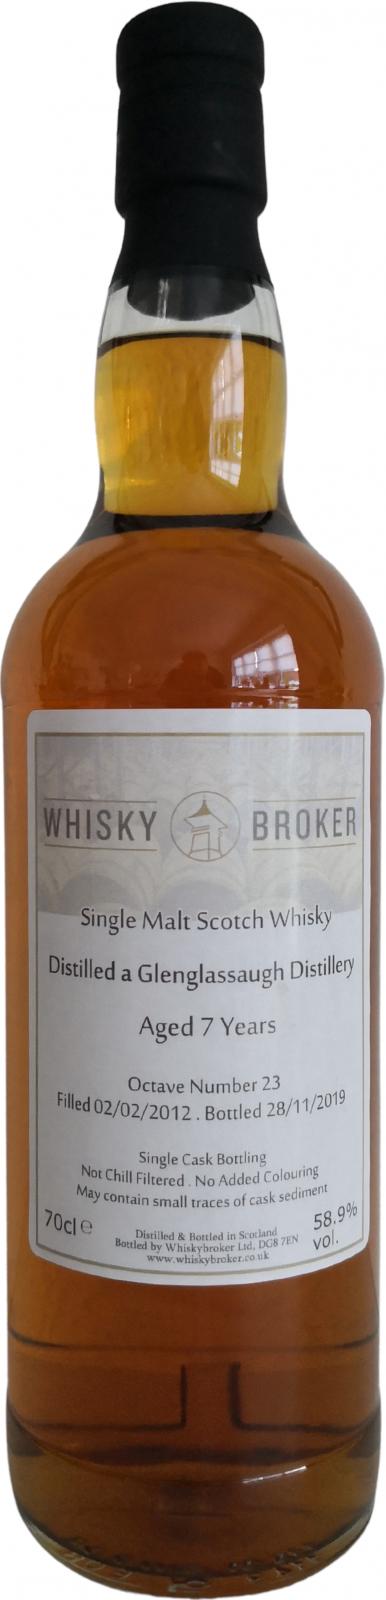 Glenglassaugh 2012 WhB Peated Oloroso Cask SC 23 Esbjerg whiskylounge 58.9% 700ml